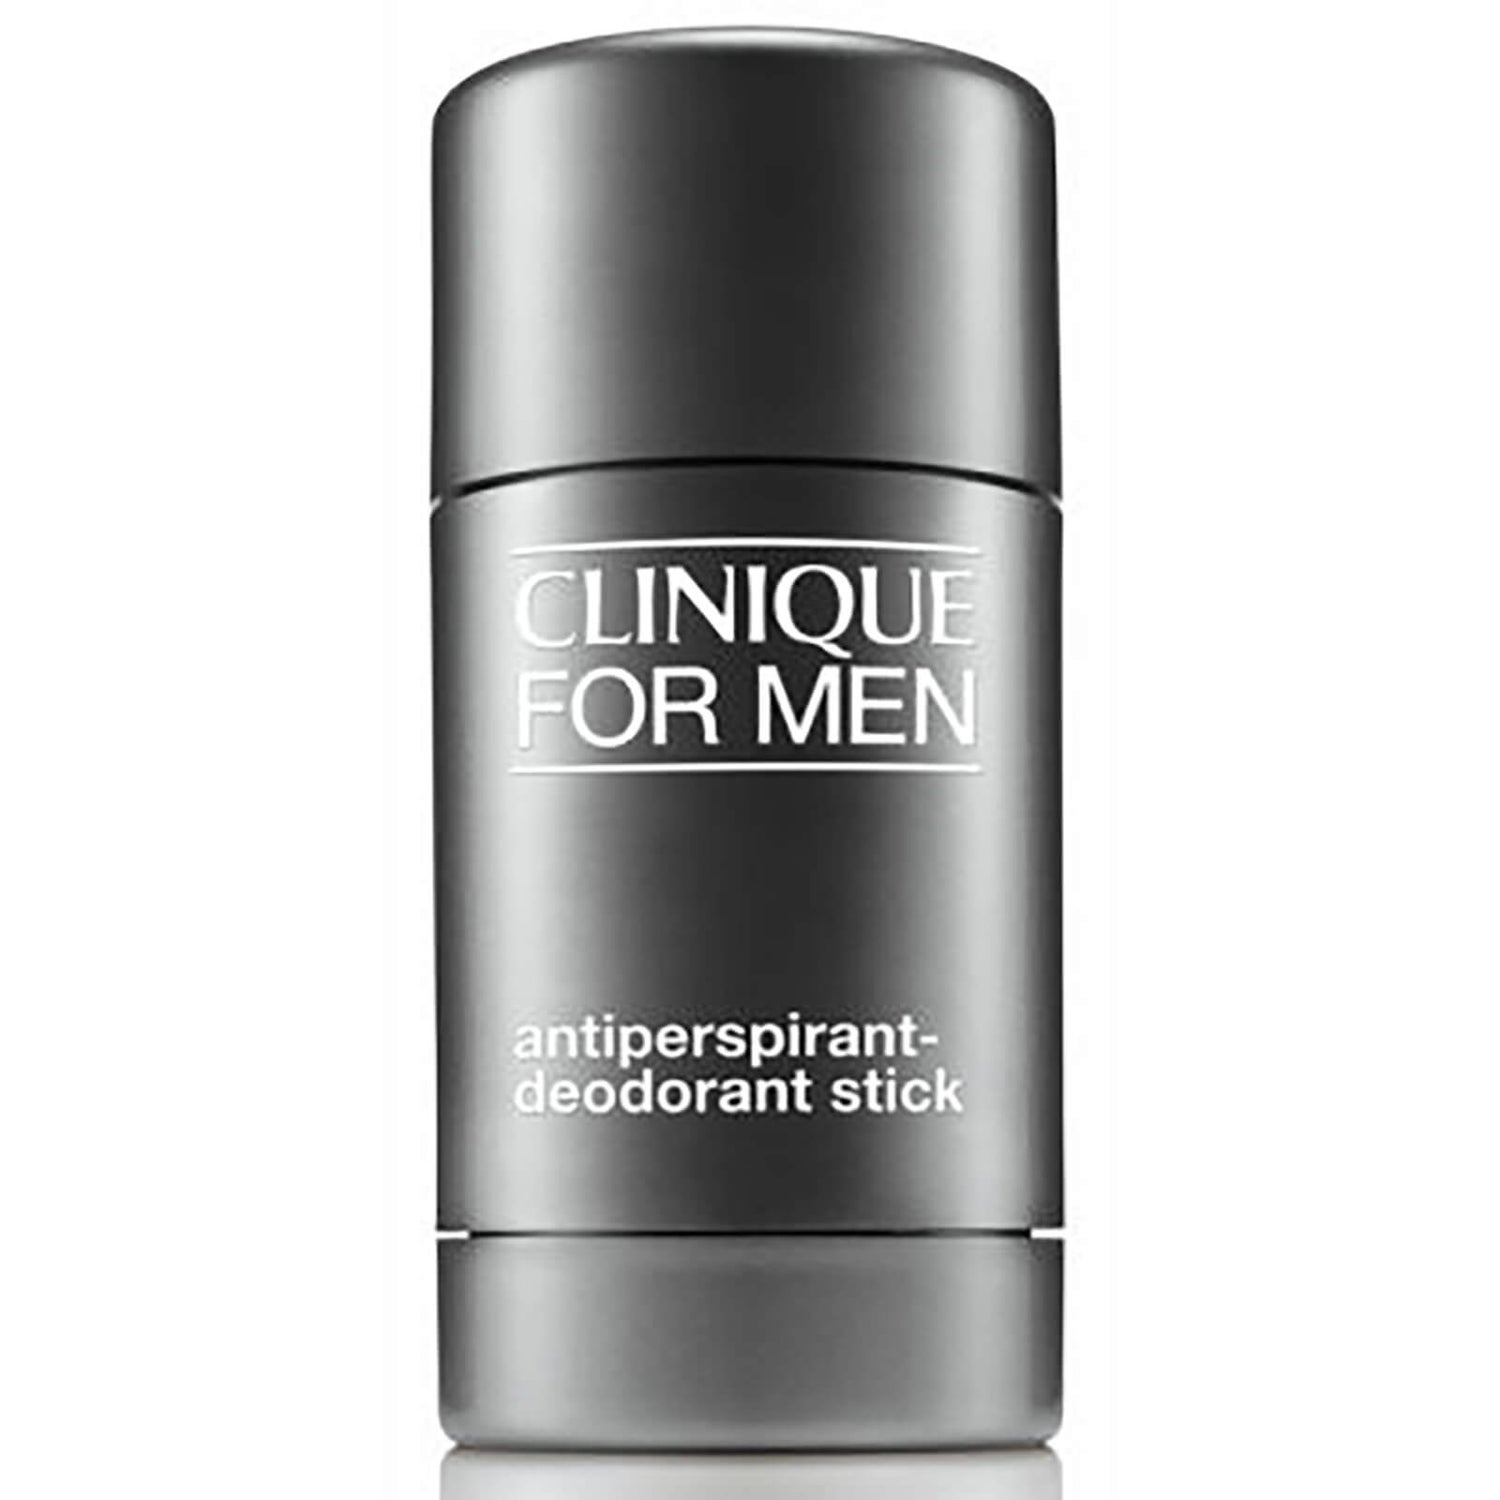 Дезодорант-антиперспирант Clinique for Men Anti-Perspirant Deodorant Stick, 75 г